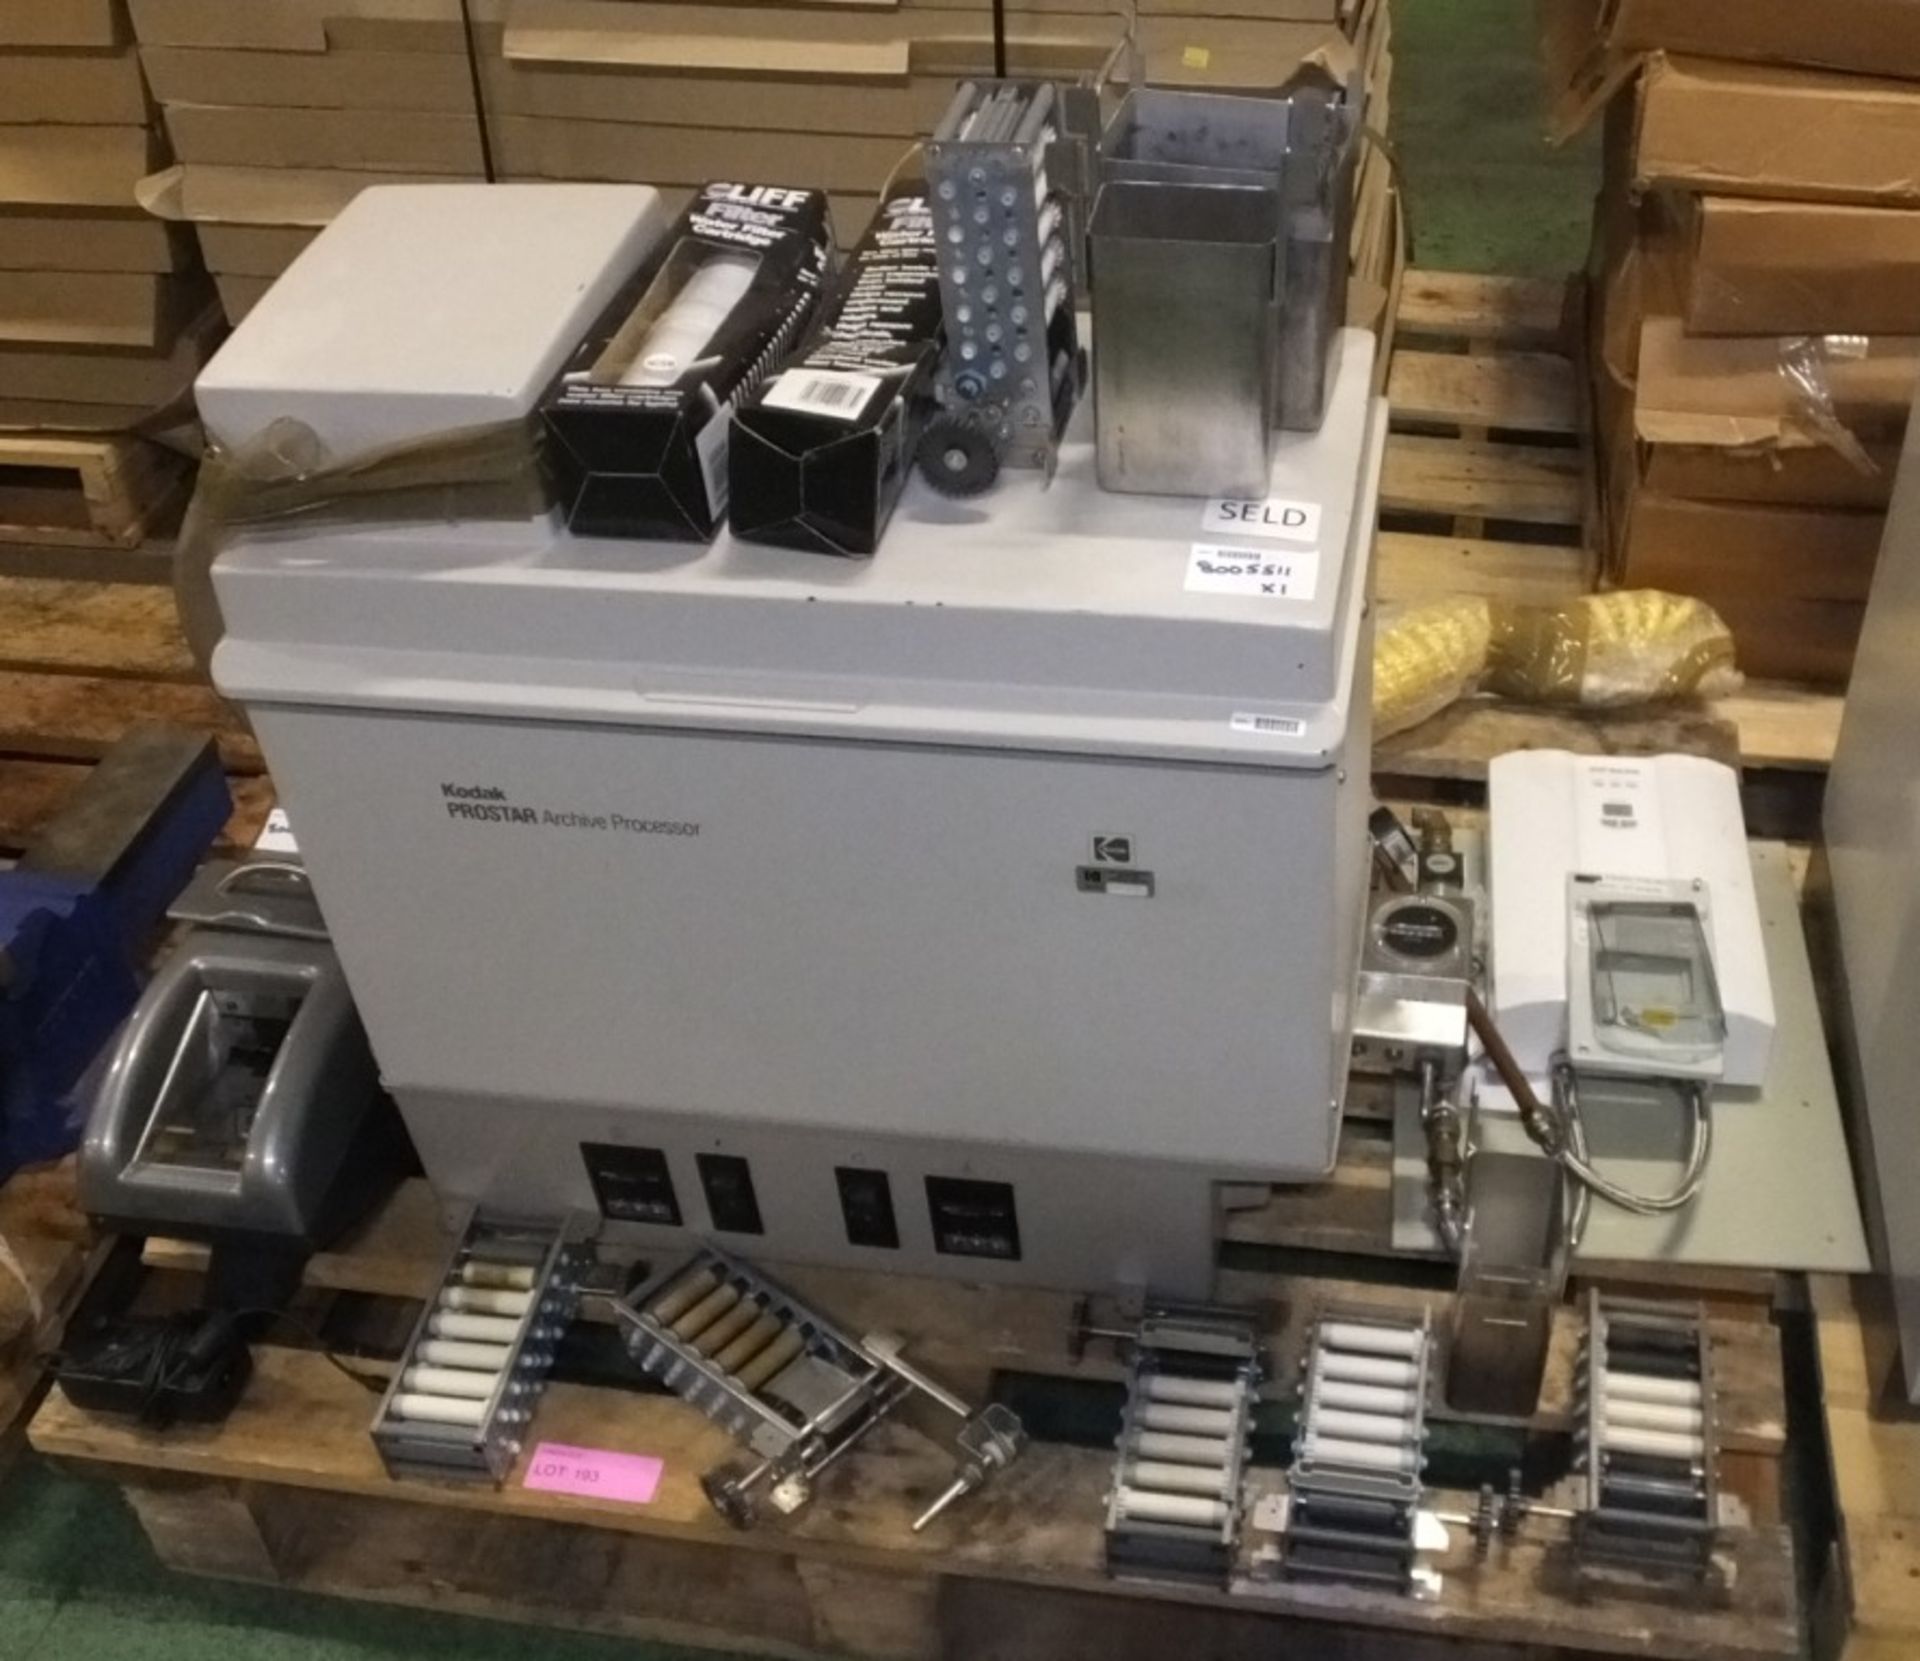 Kodak Prostar Archive Processor, WV C-250 microfilm scanner, Zip Inline Boiler system, wat